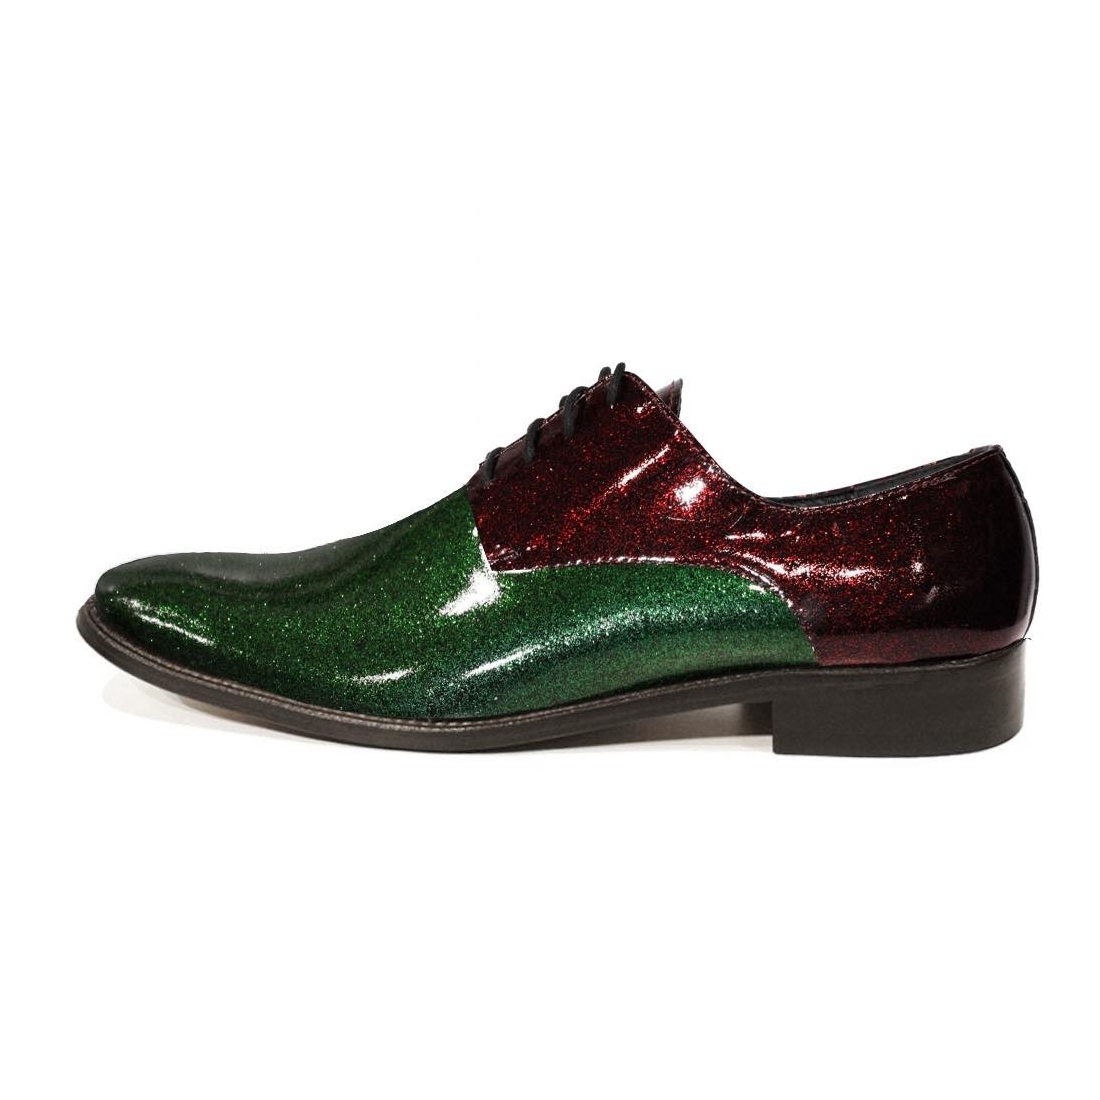 Modello Luccichio - クラシックシューズ - Handmade Colorful Italian Leather Shoes